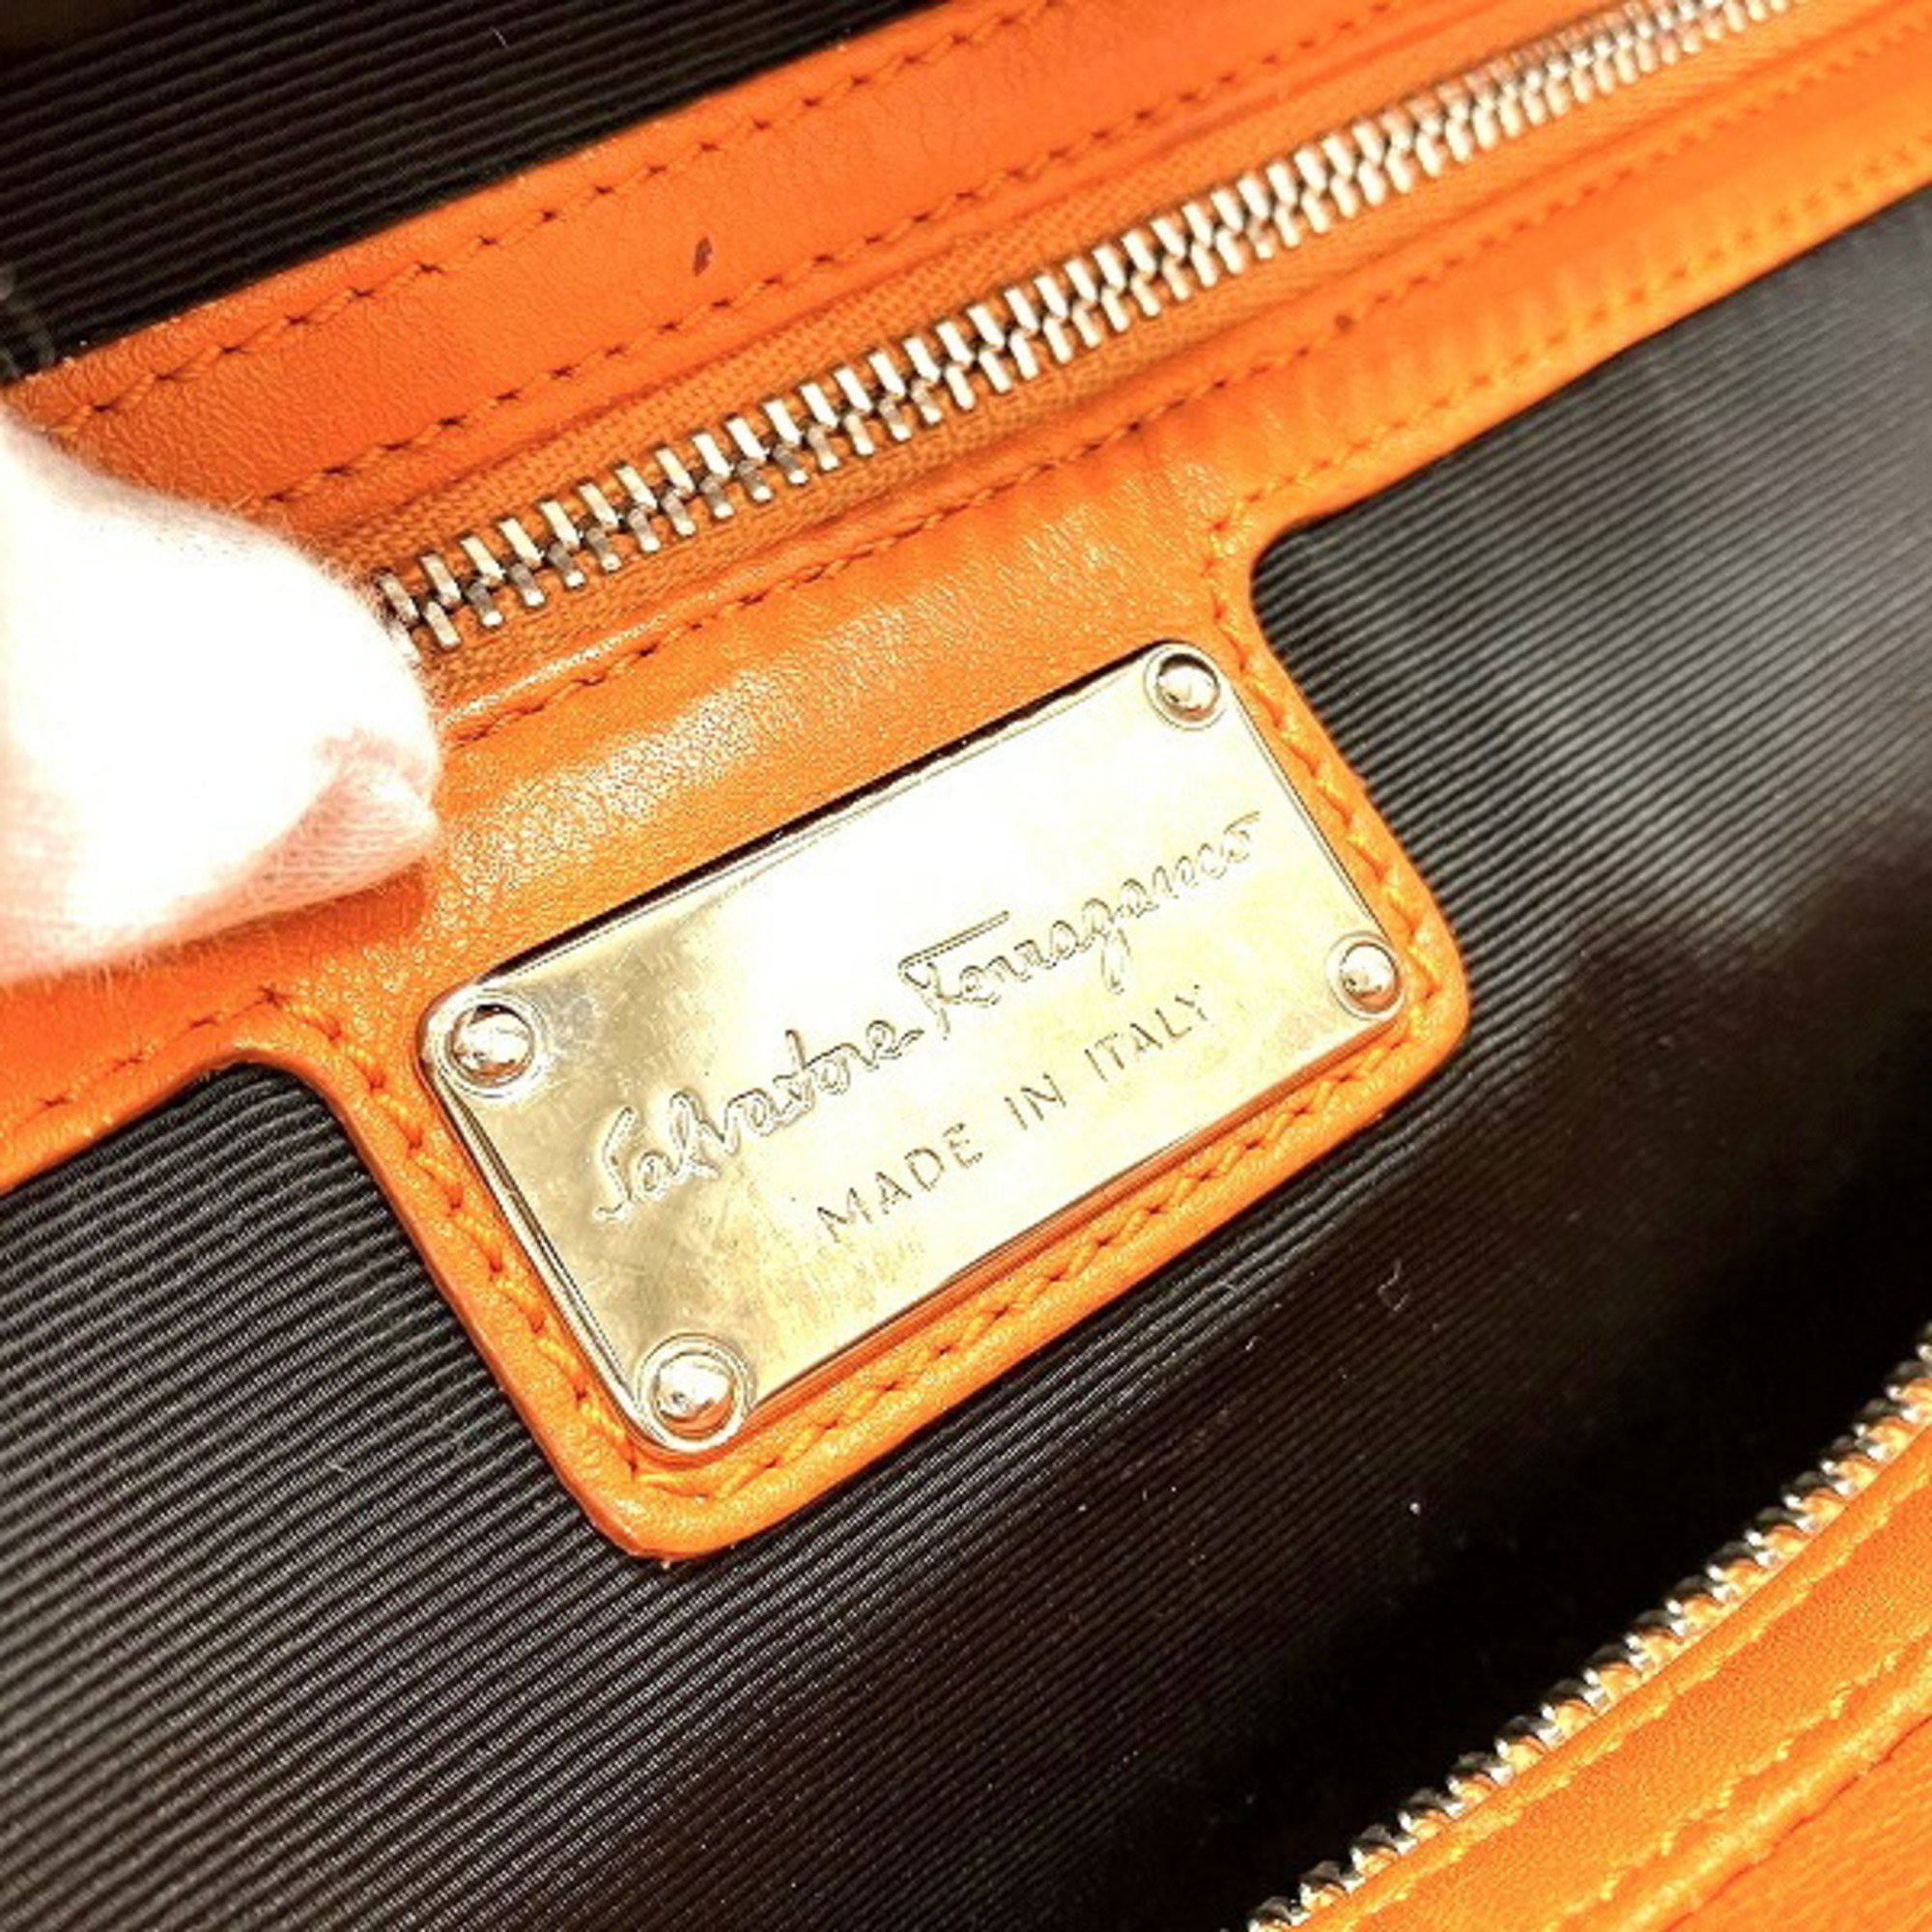 Salvatore Ferragamo Ferragamo Vara Ribbon E353 Leather Orange Bag Handbag Ladies